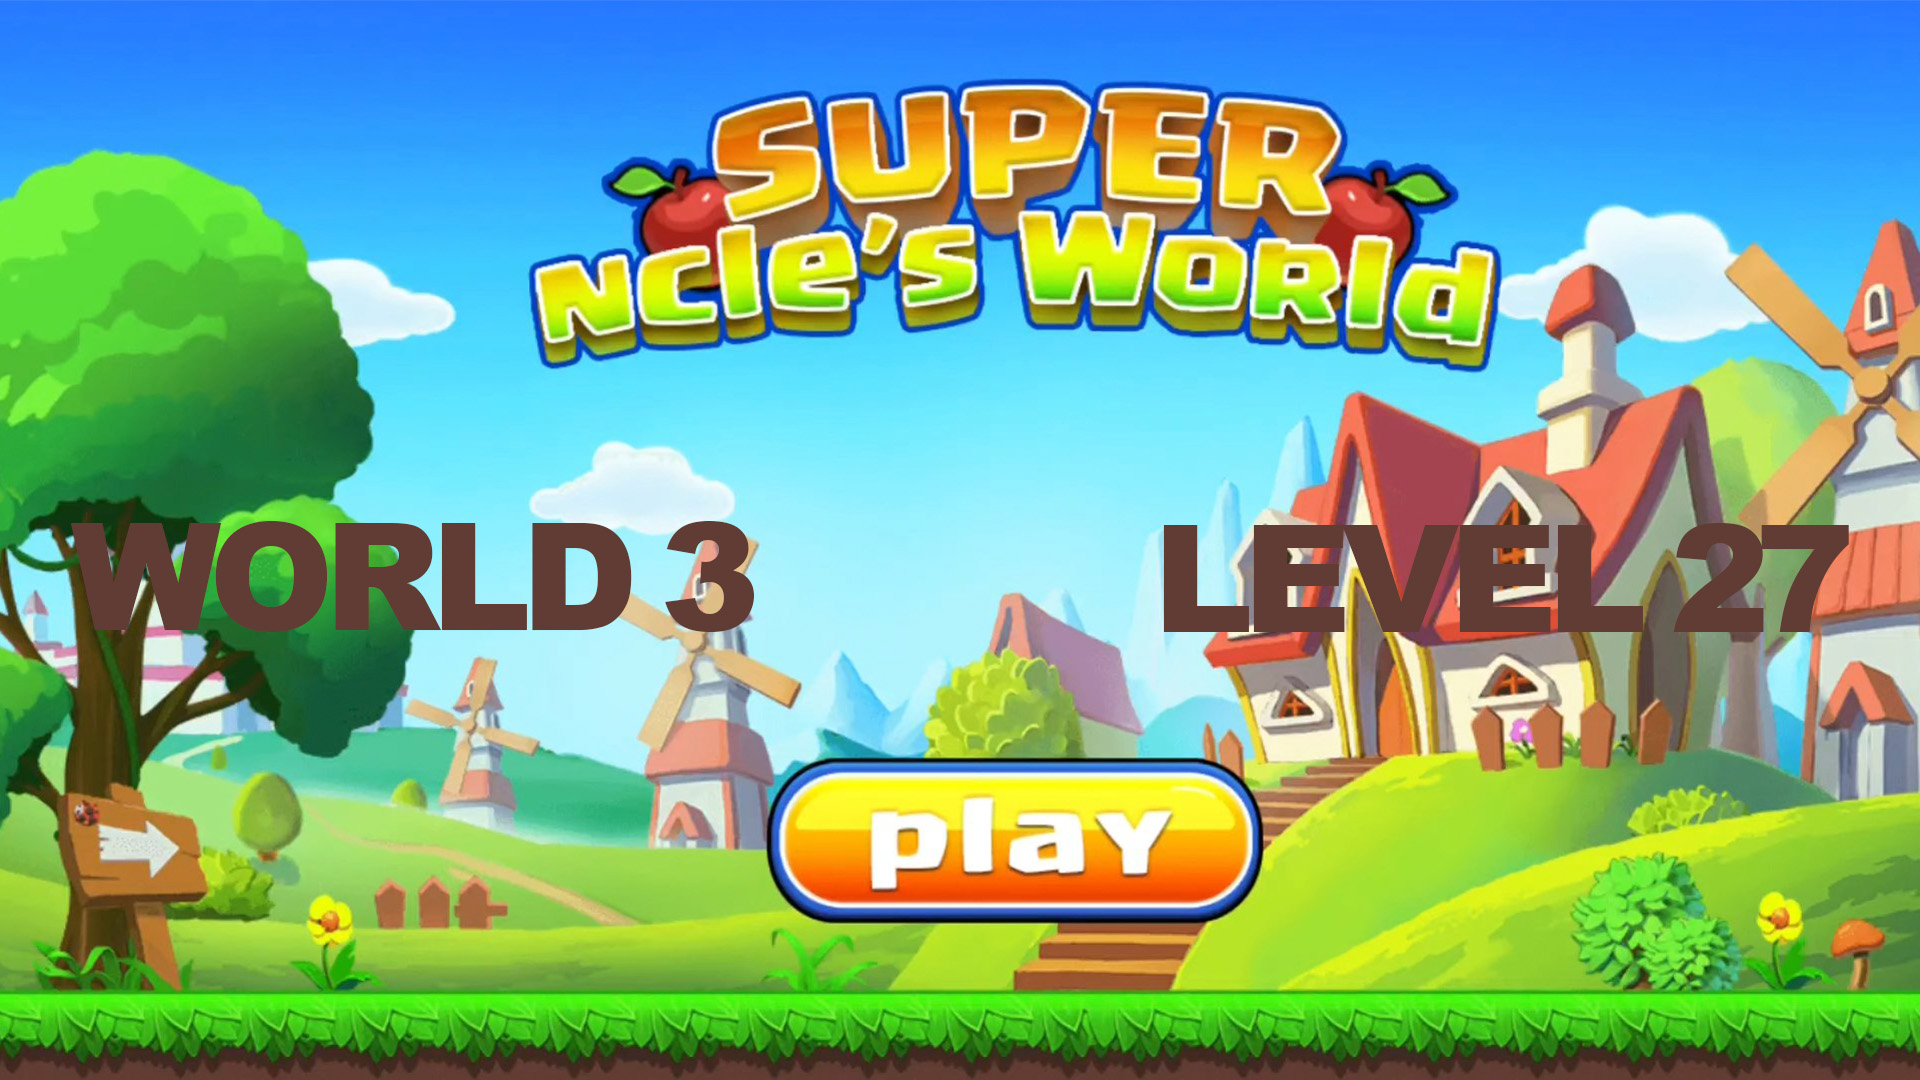 Super ncle's  World 3. Level 27.